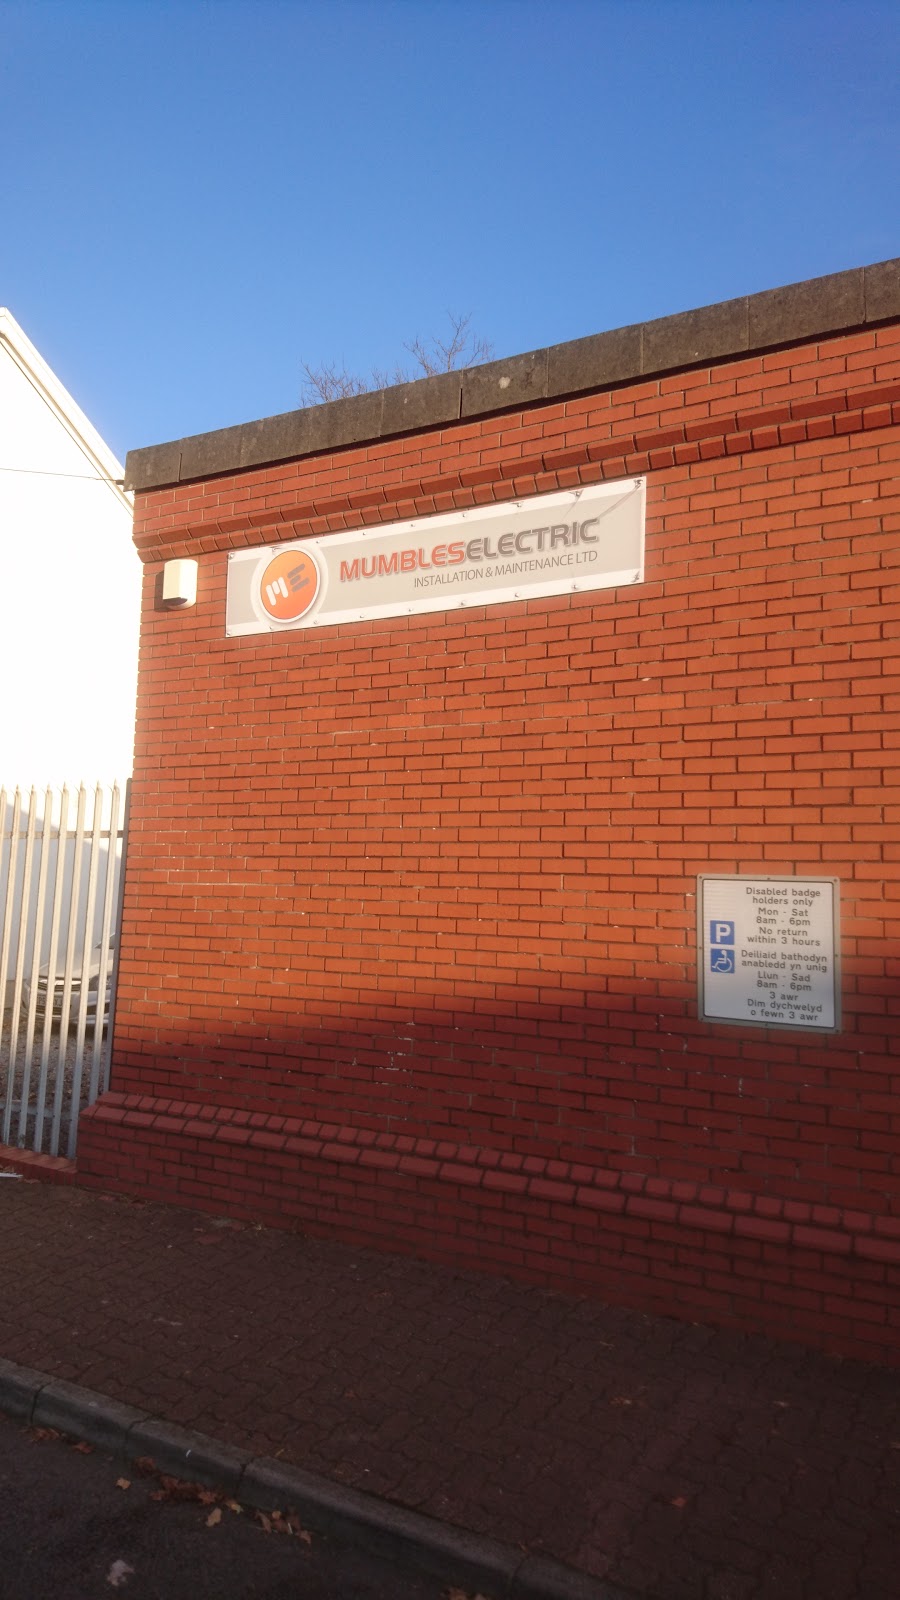 Mumbles Electric Installation & Maintenance Ltd